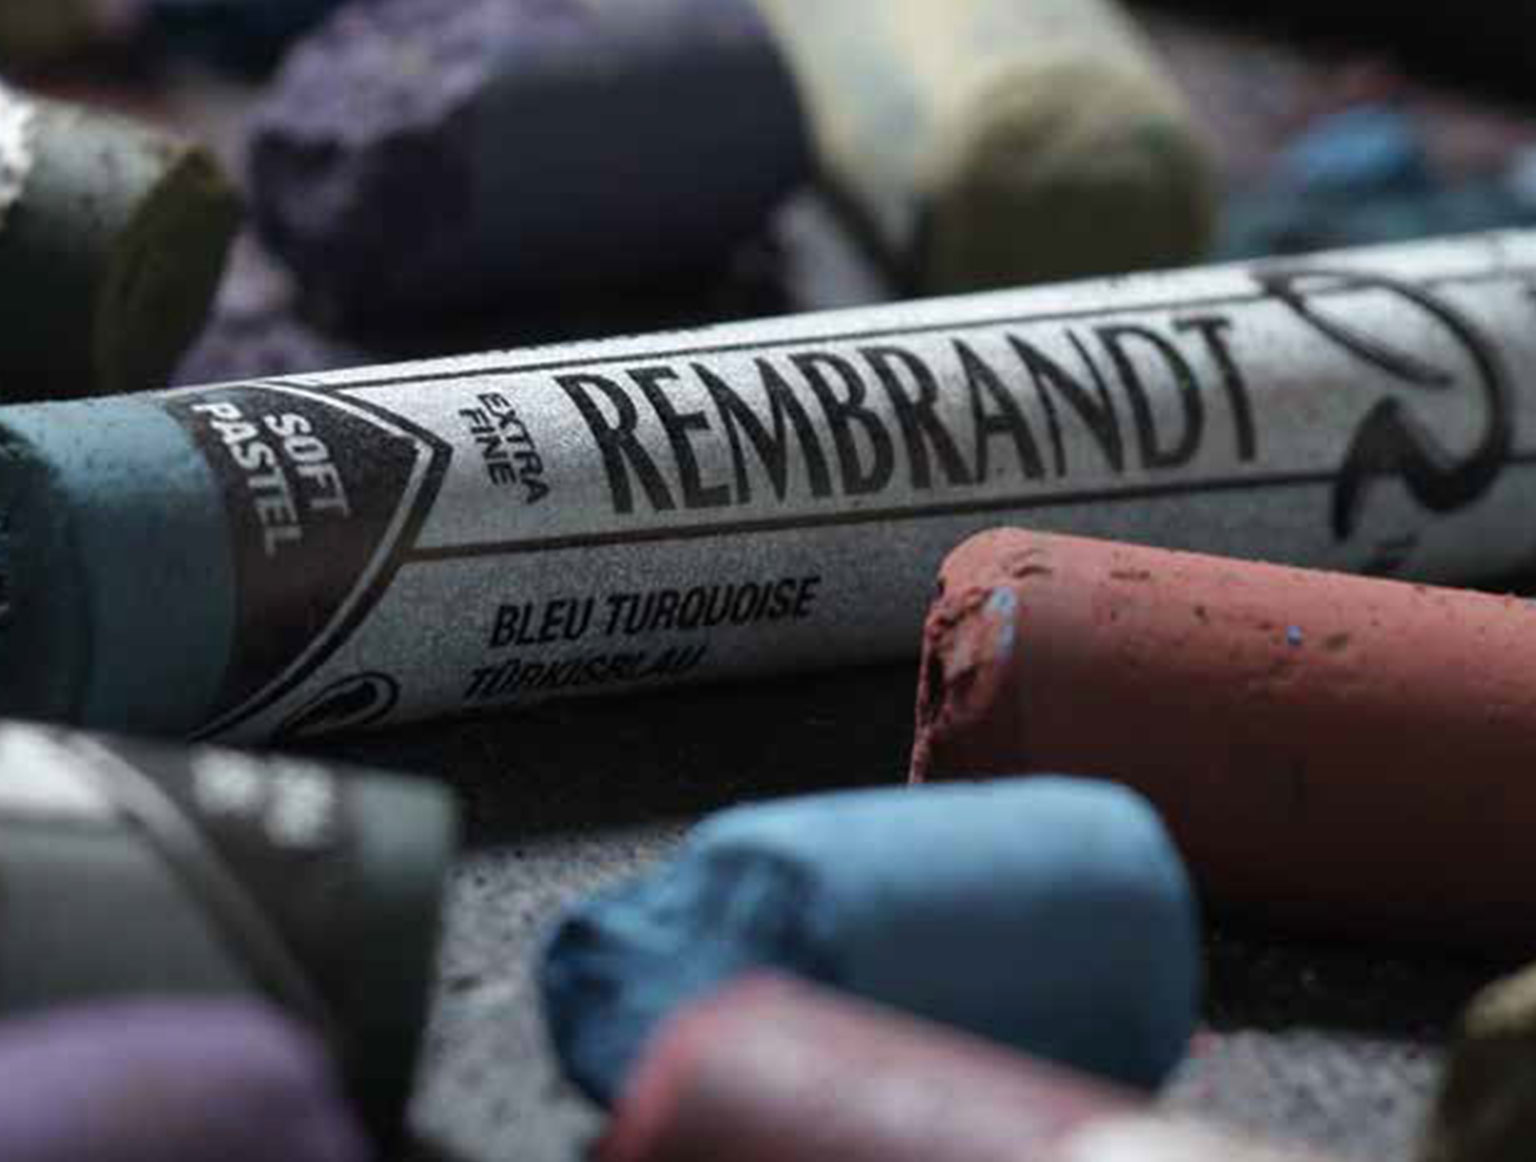 ideal para el fondo Rembrandt france import Caja 15 pastel Rembrandt suaves Selección de tonos oscuros 